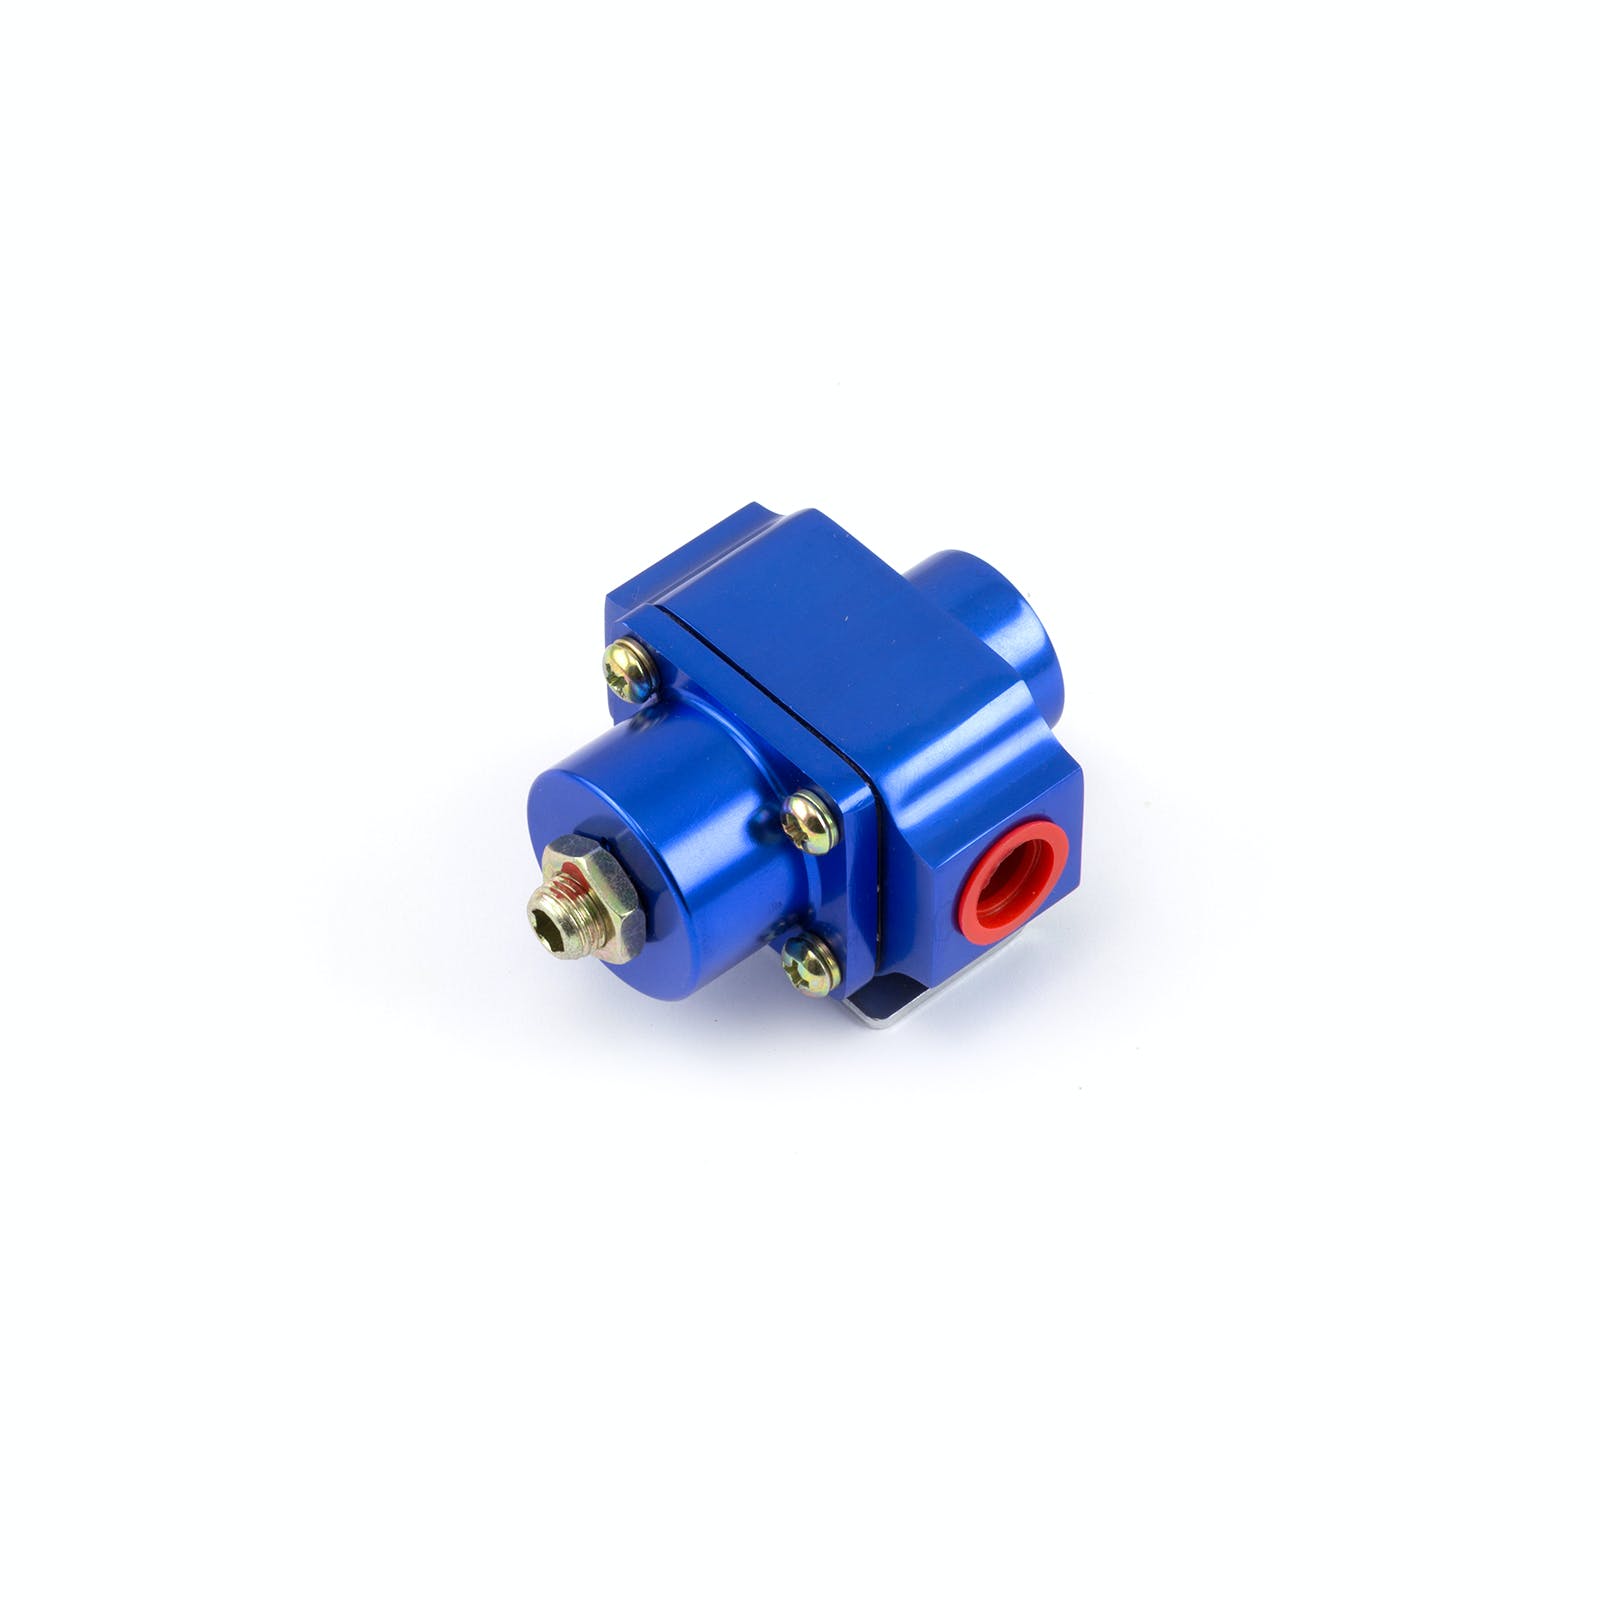 Speedmaster PCE145.1030 140 Gph Electric Fuel Pump w/ Blue Regulator and Gauge Combo Kit